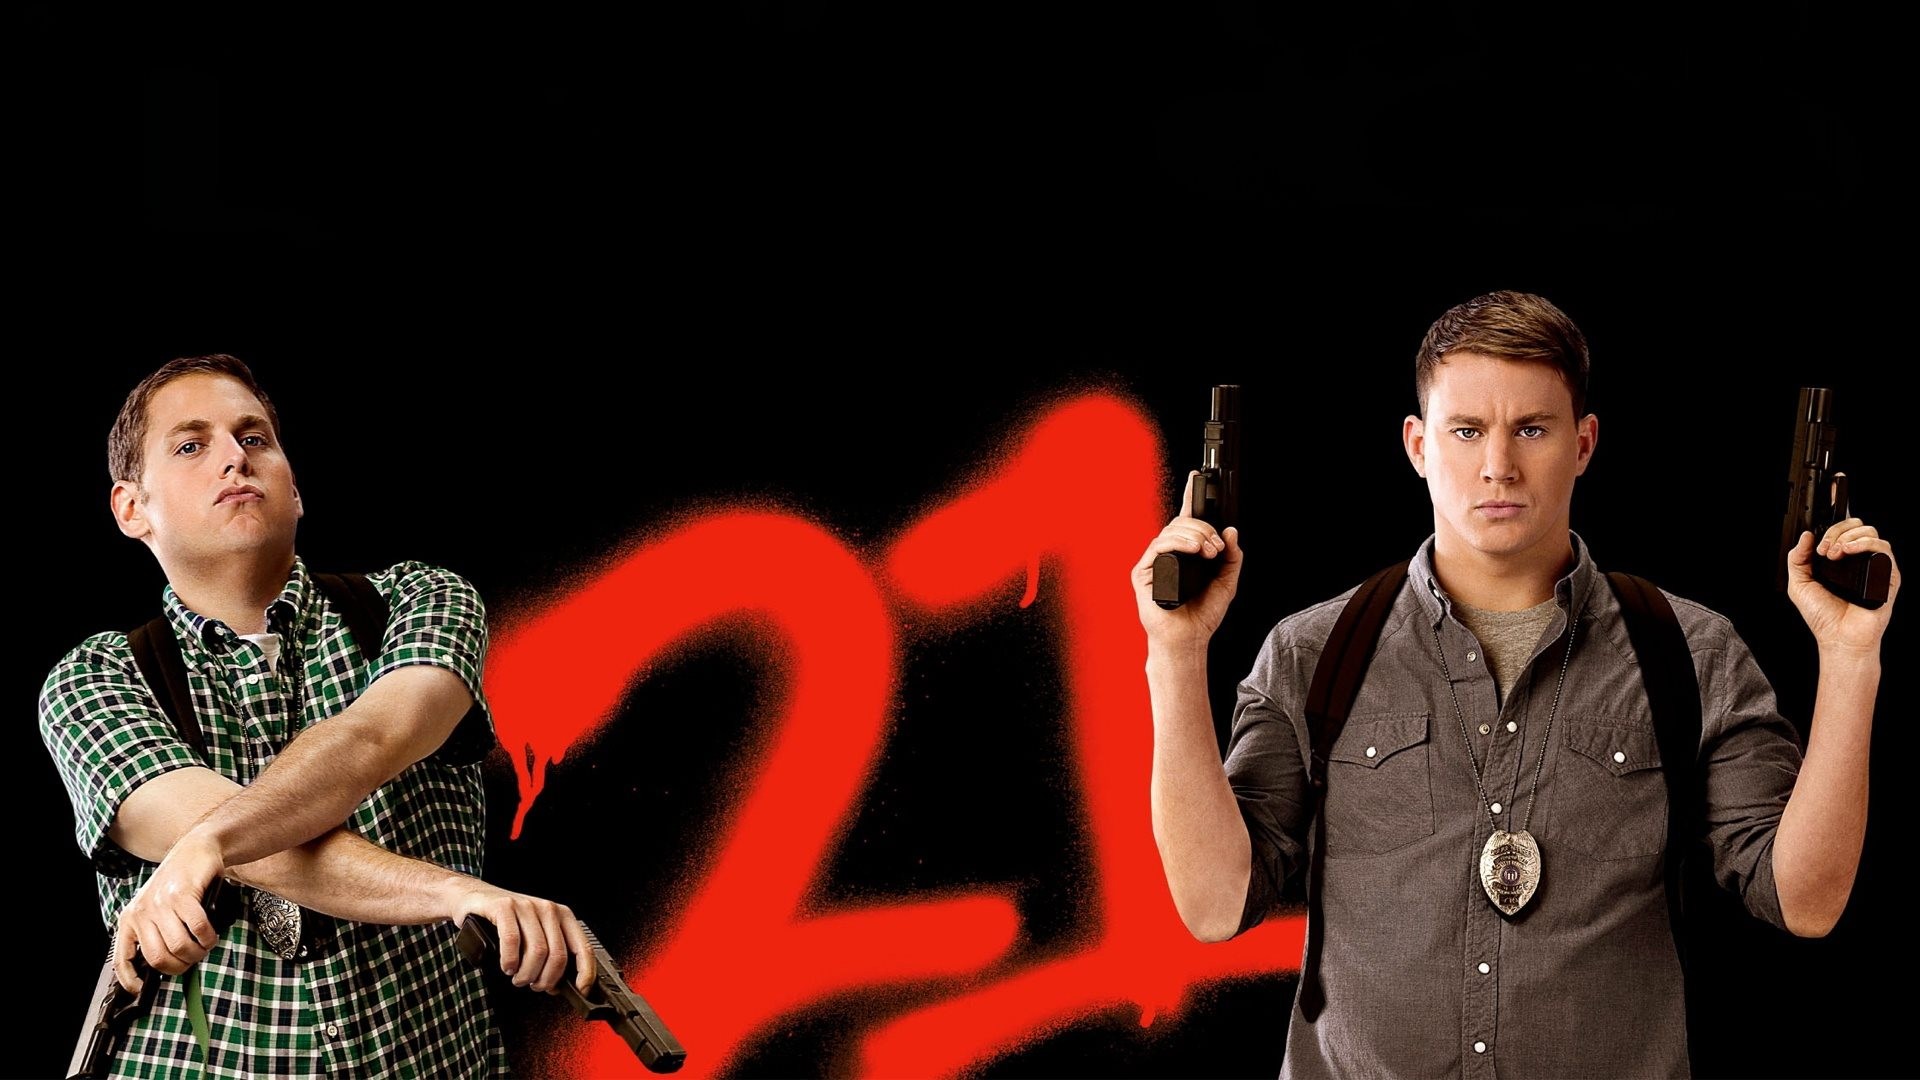 People 1920x1080 Channing Tatum movies 21 Jump Street 2012 (Year) men